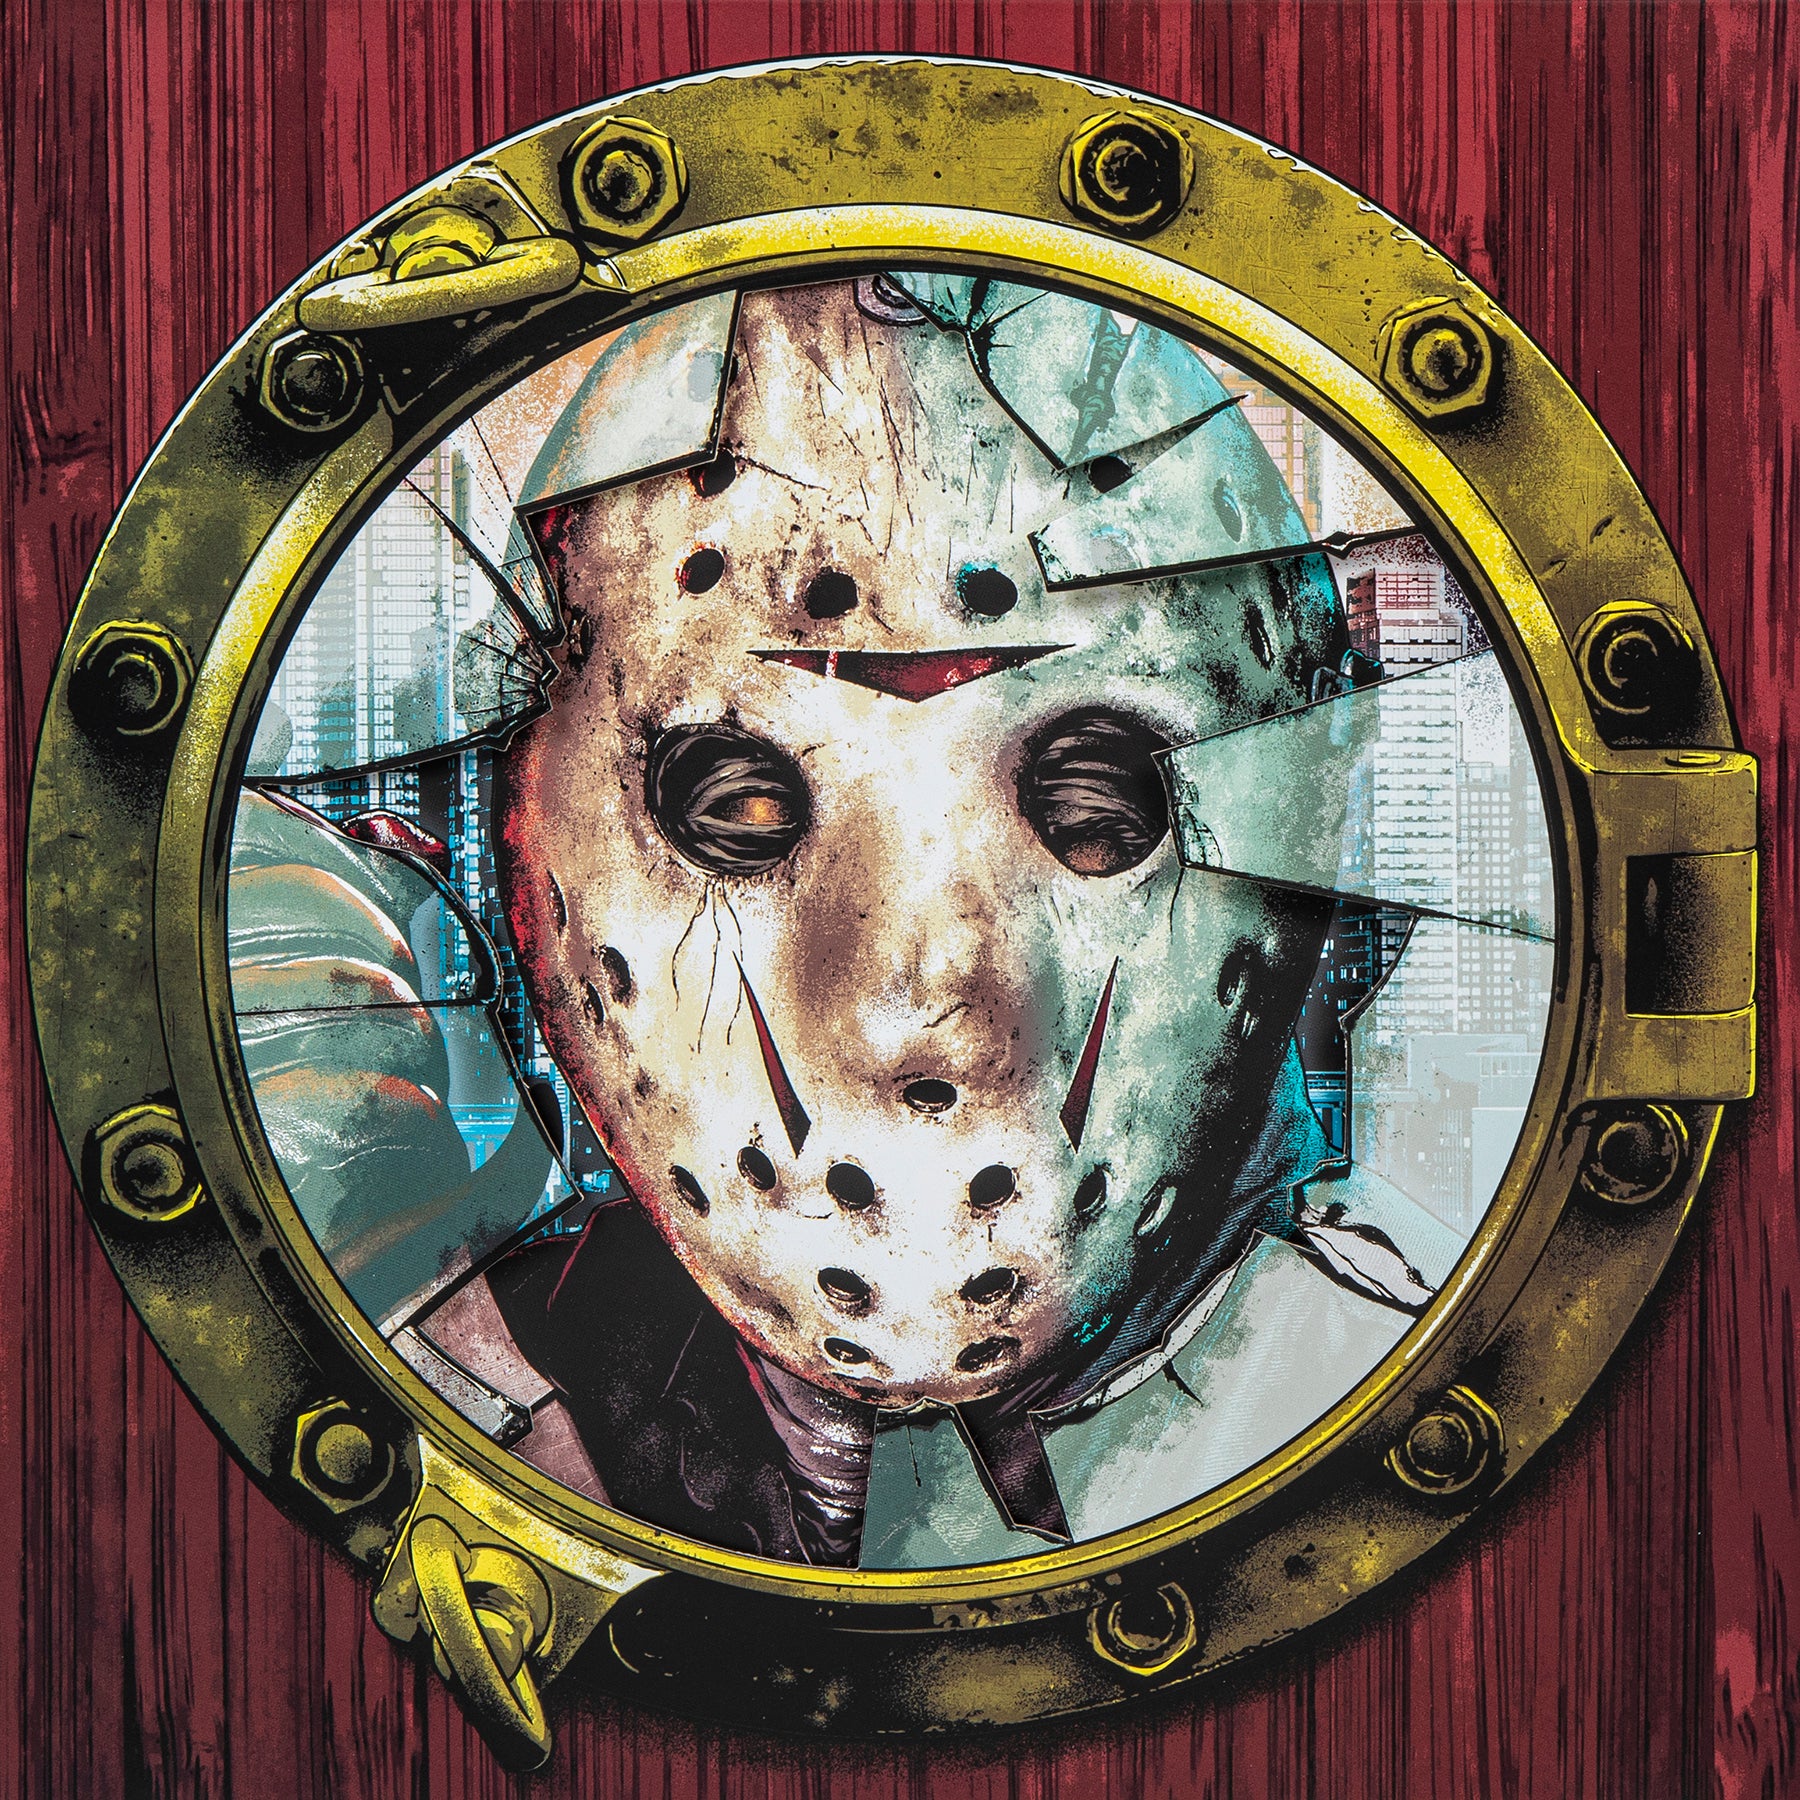 Friday The 13th Part VIII: Jason Takes Manhattan – Waxwork Records